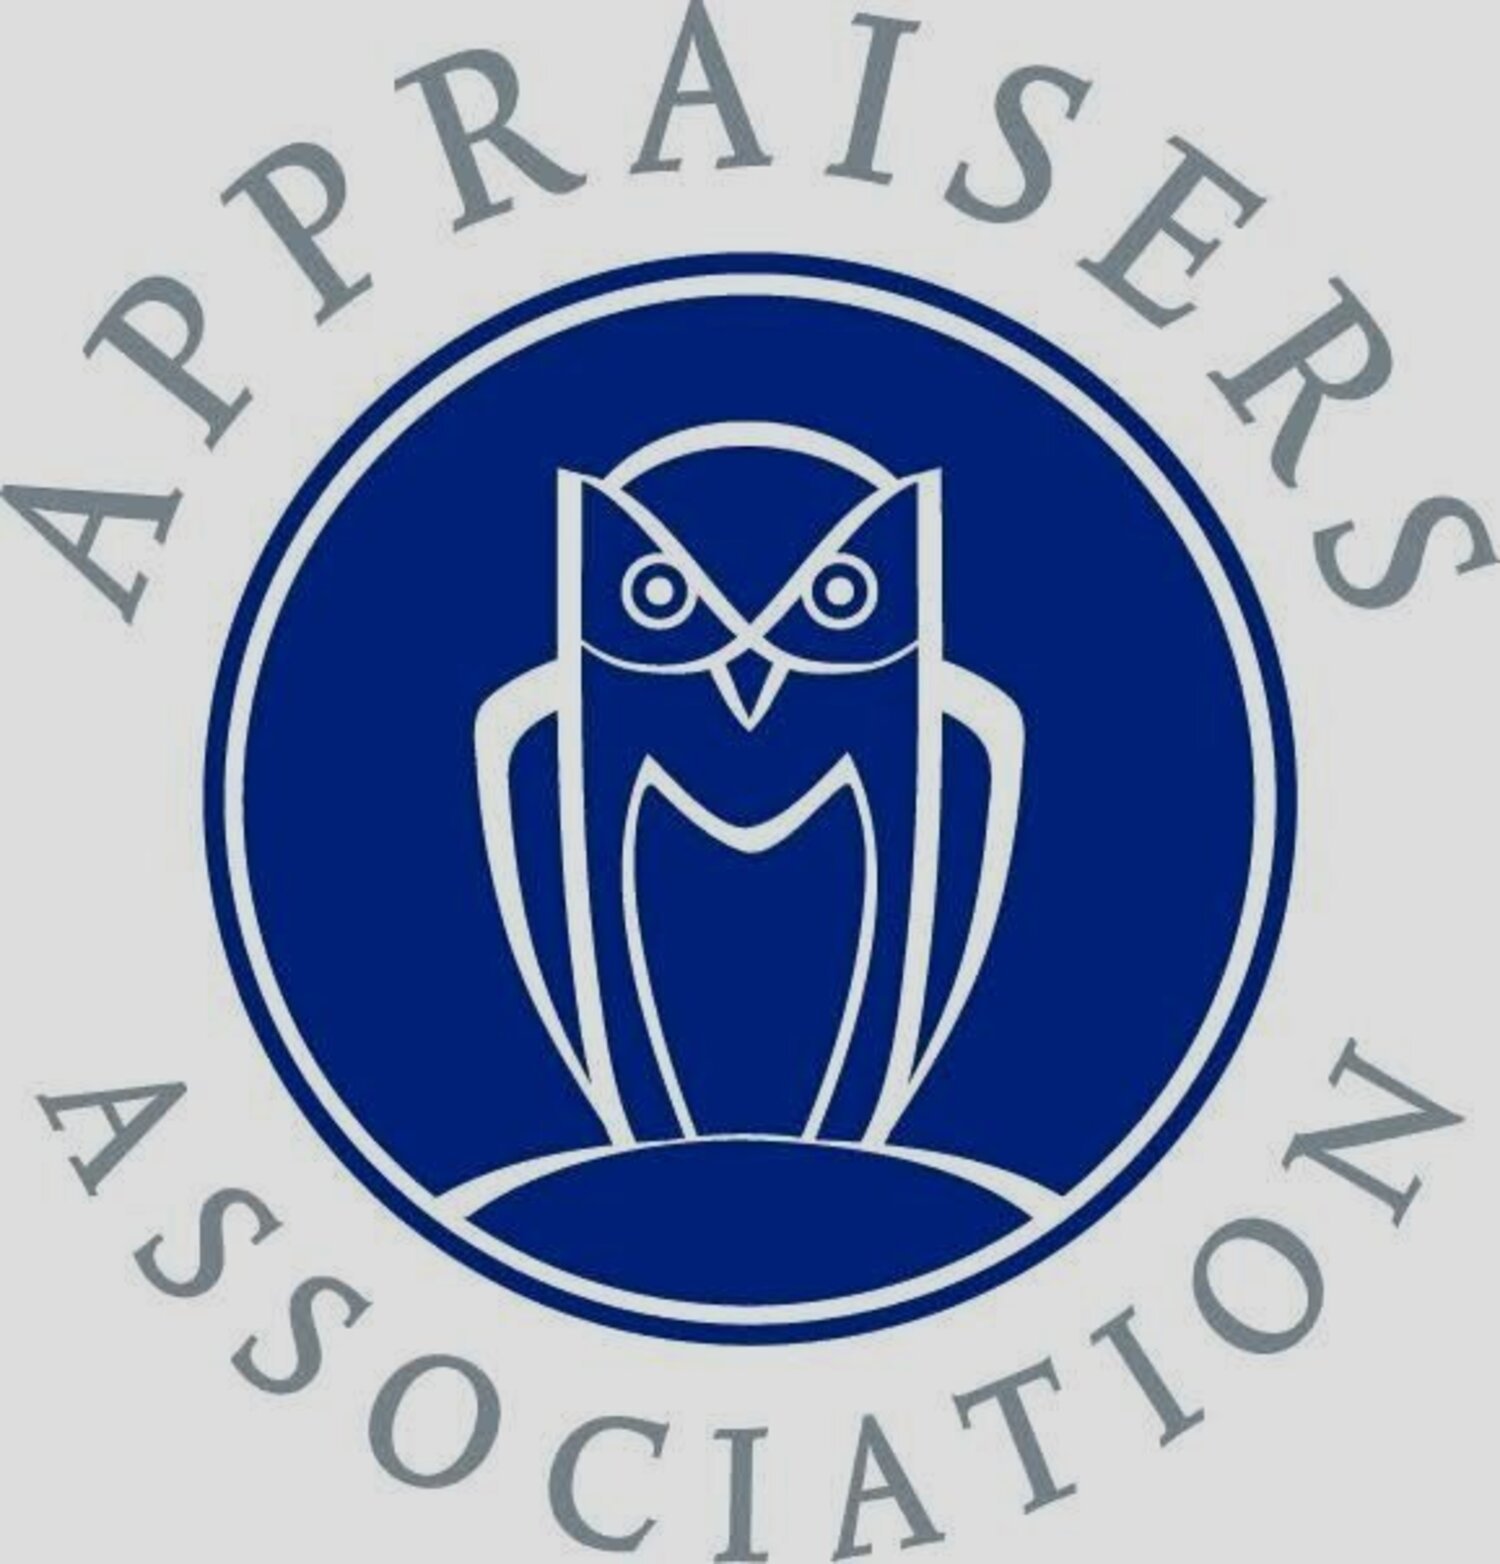 appraisers+logo.jpg